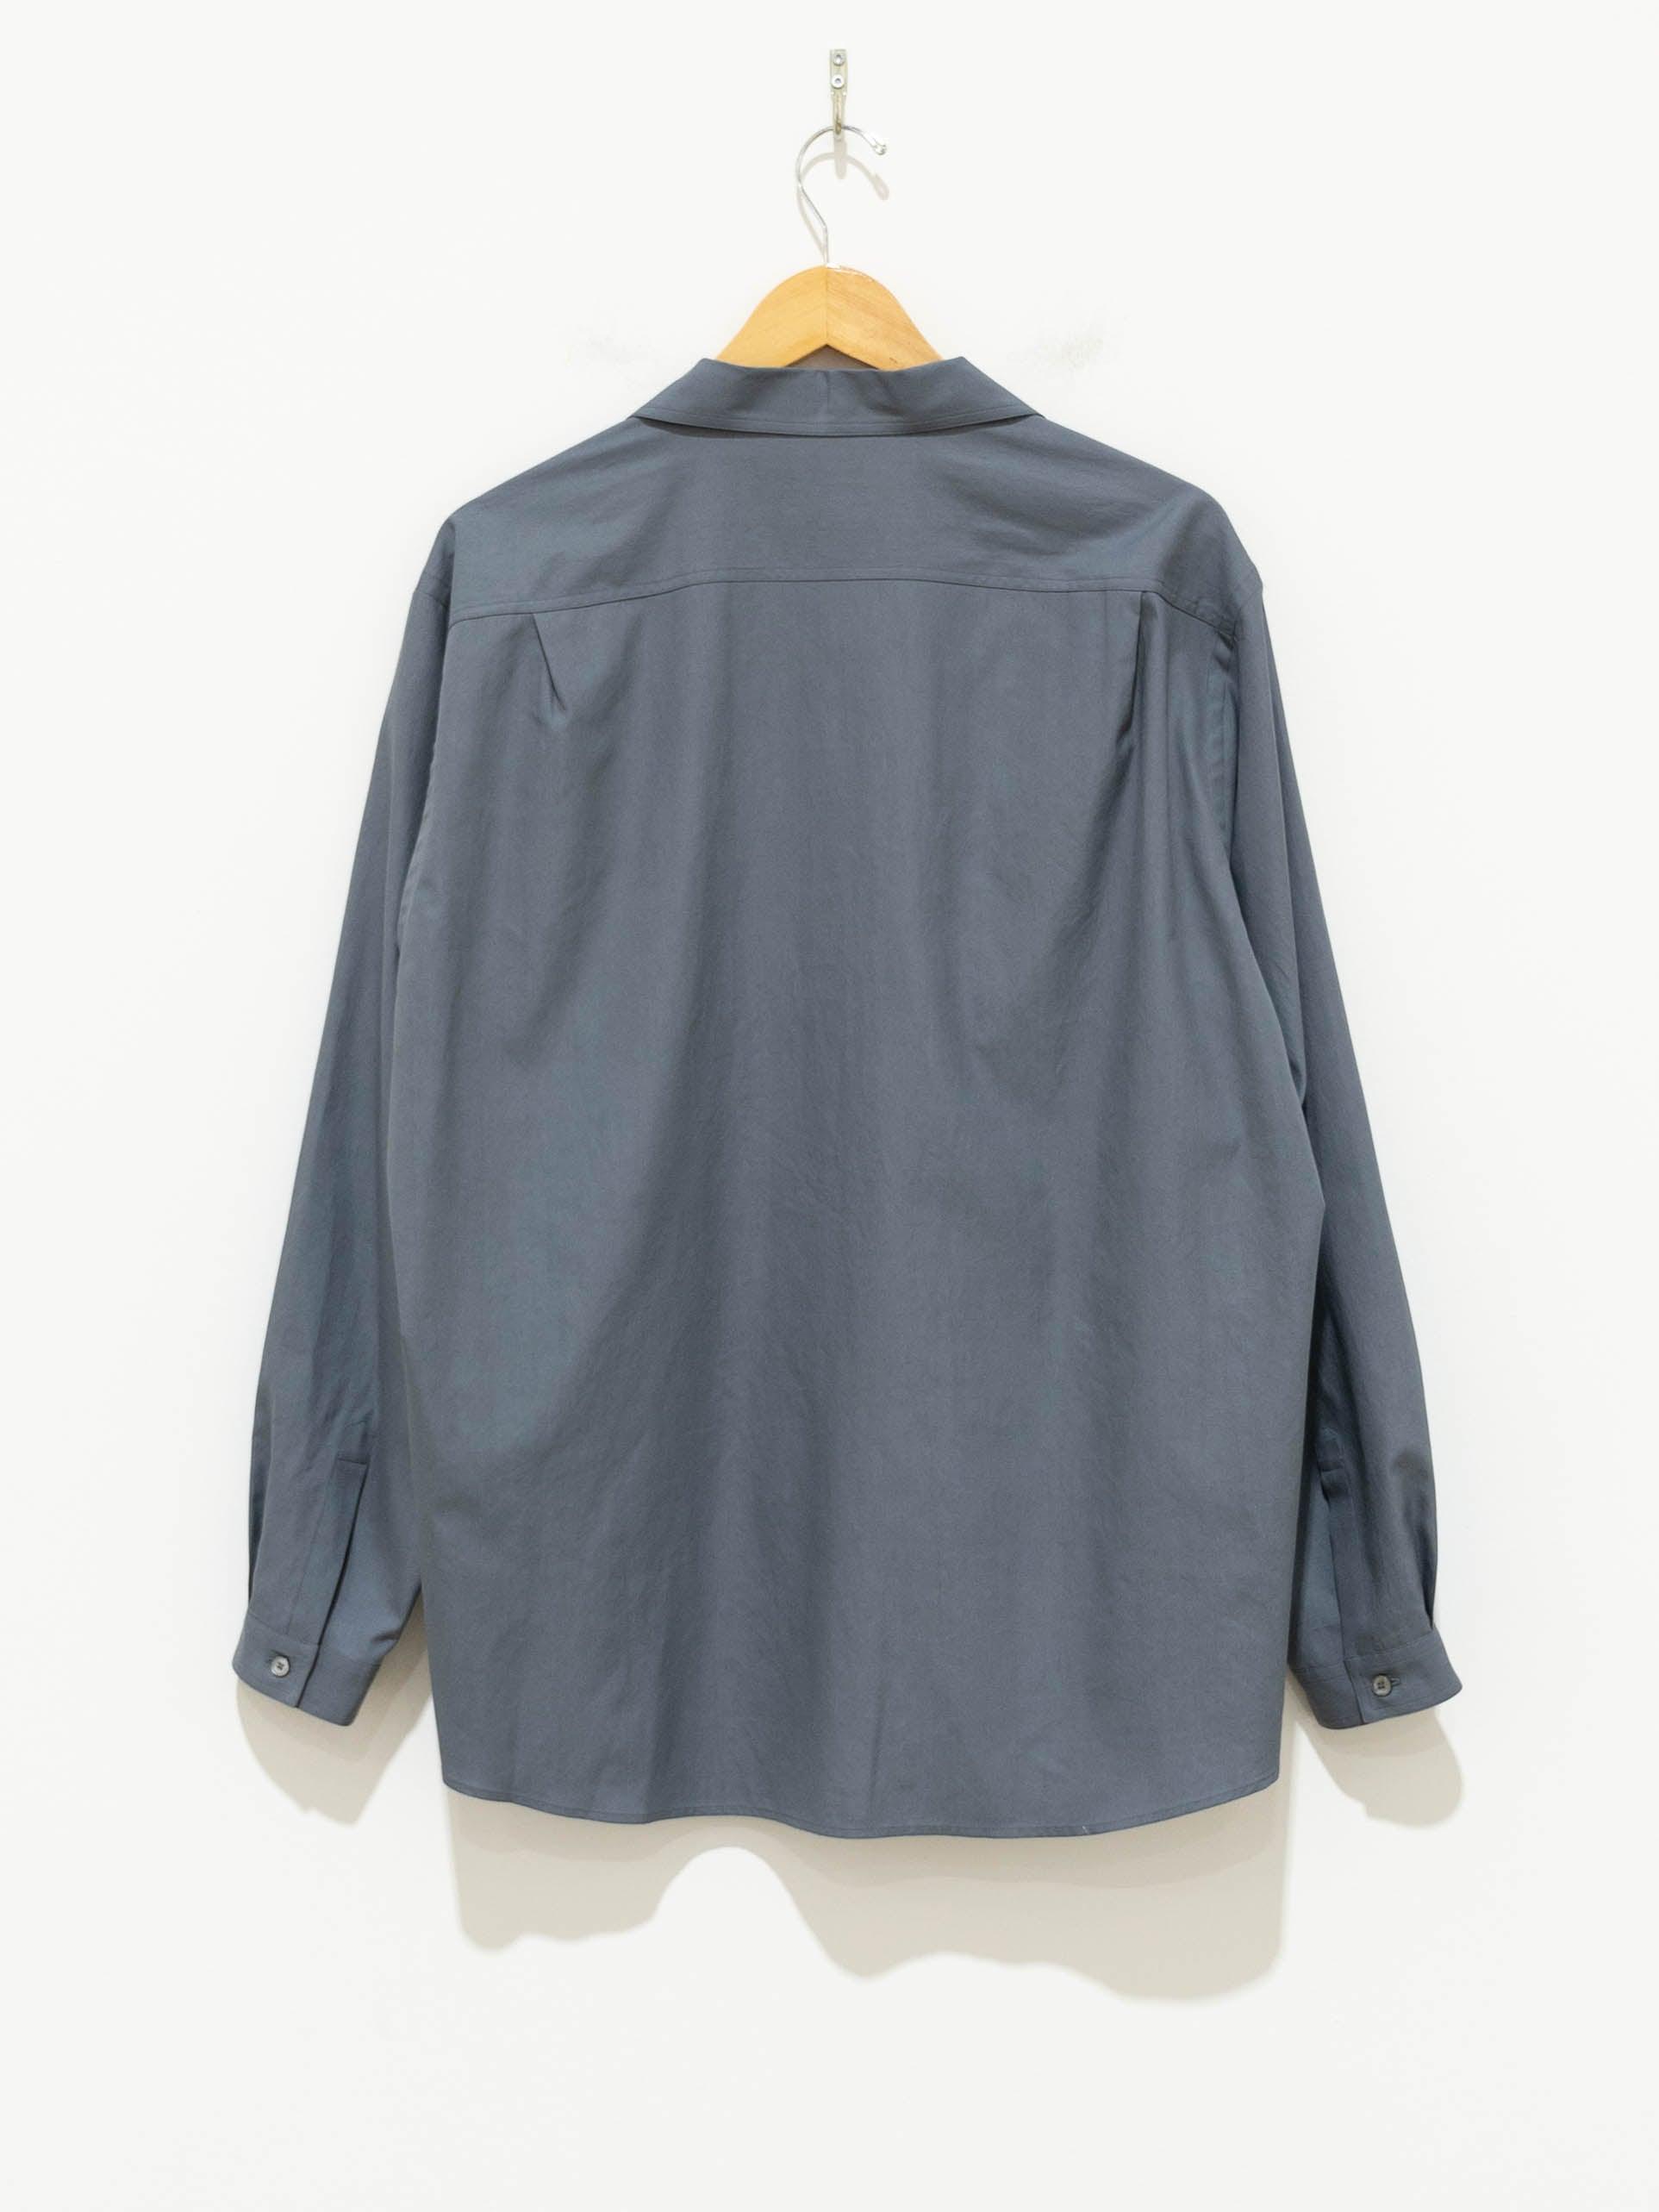 Namu Shop - Auralee Washed Finx Twill Pullover Shirt - Dark Blue Gray